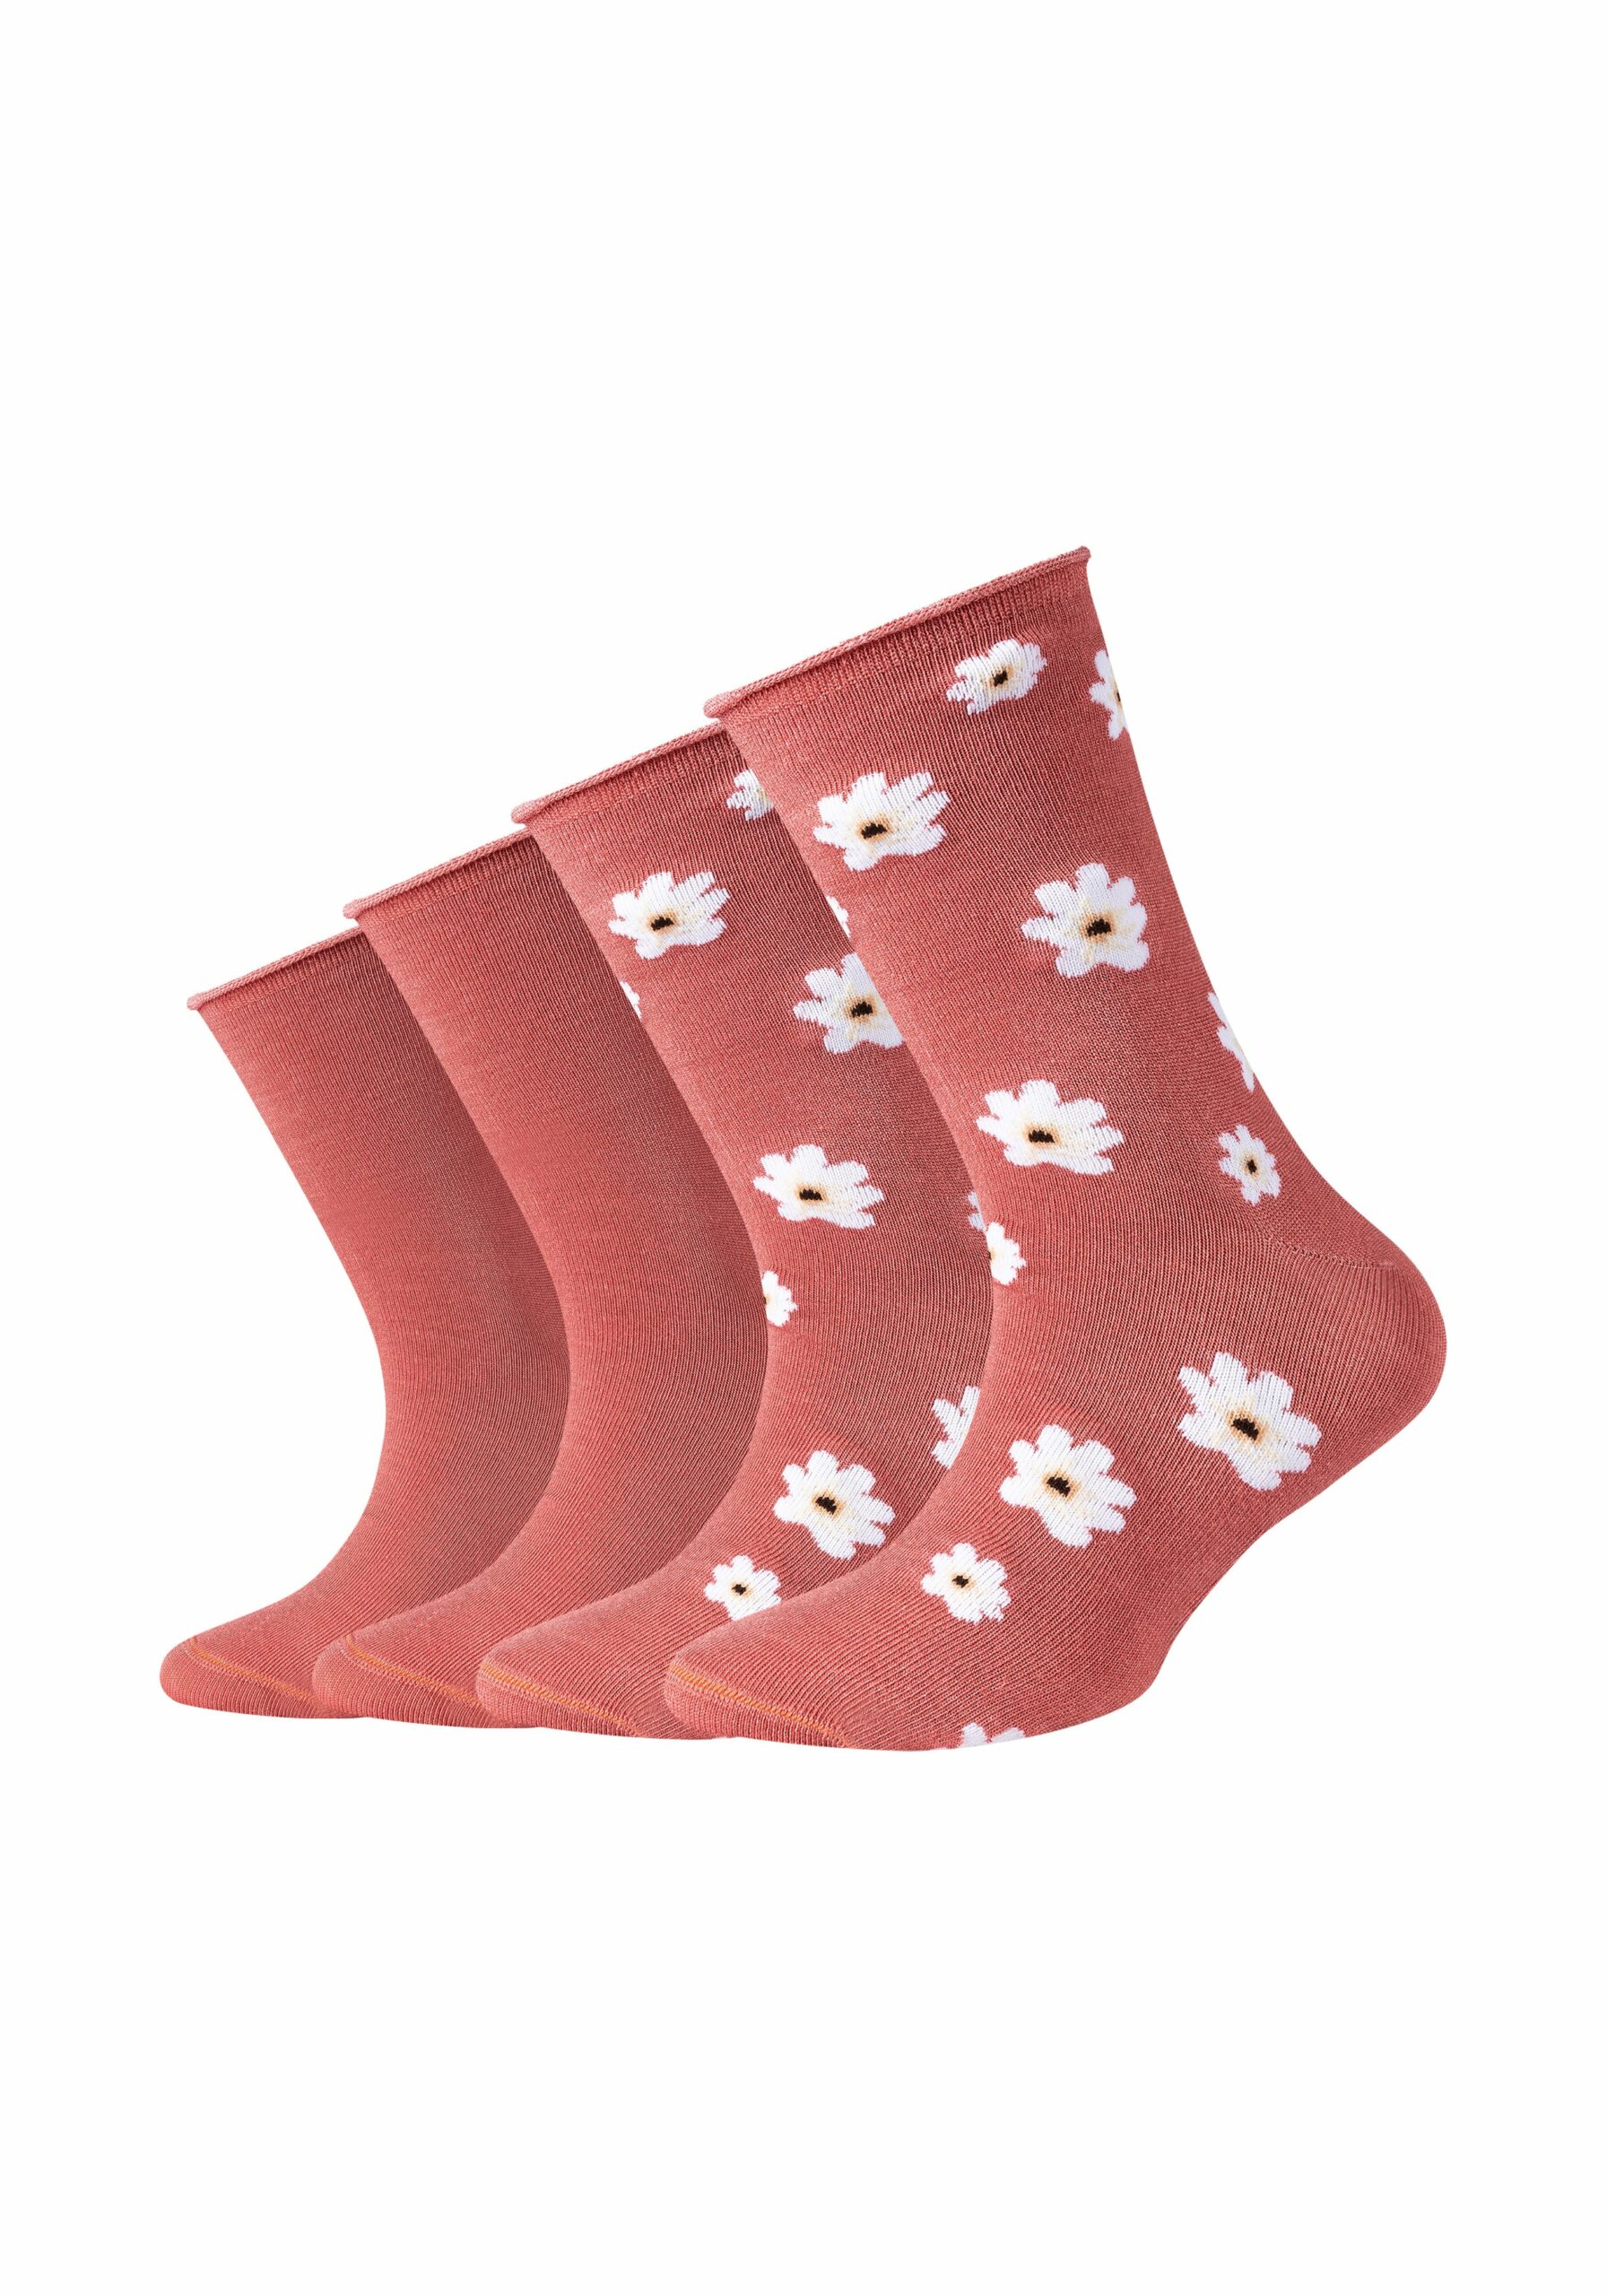 Strümpfe & Socken online bestellen